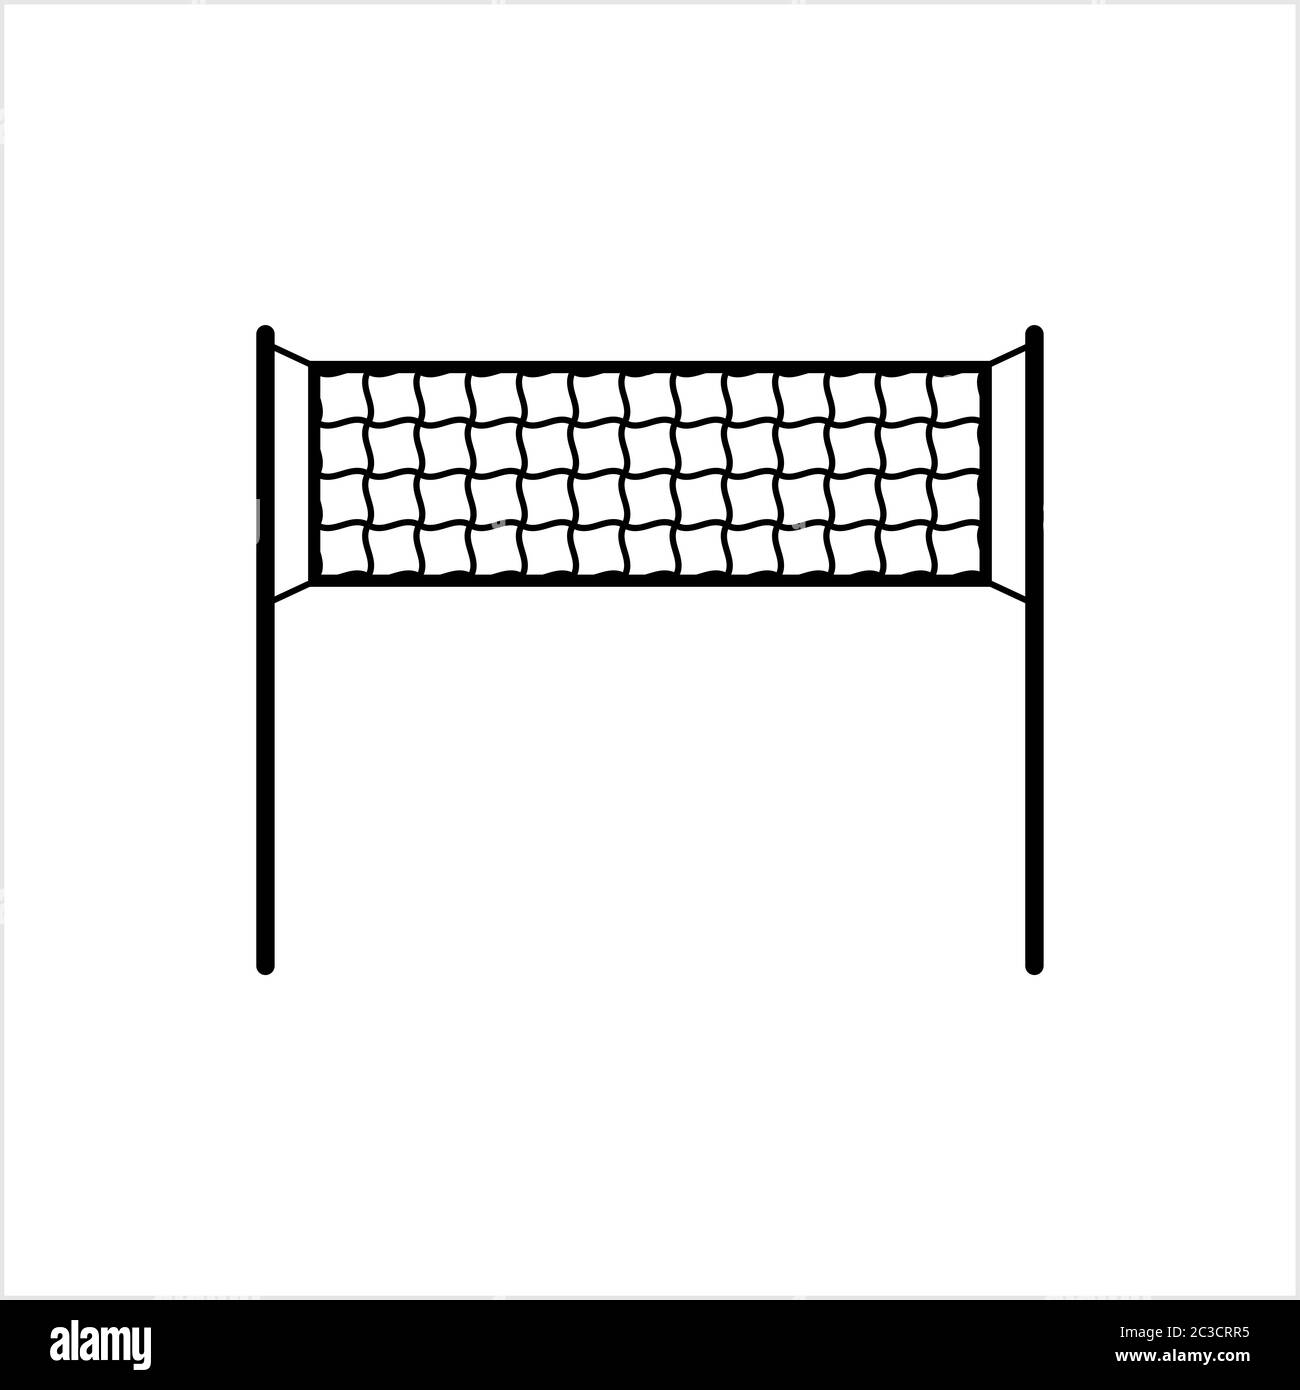 Volleyball Net, Sport Net, Vector Art Illustration Stock Vector Image ...